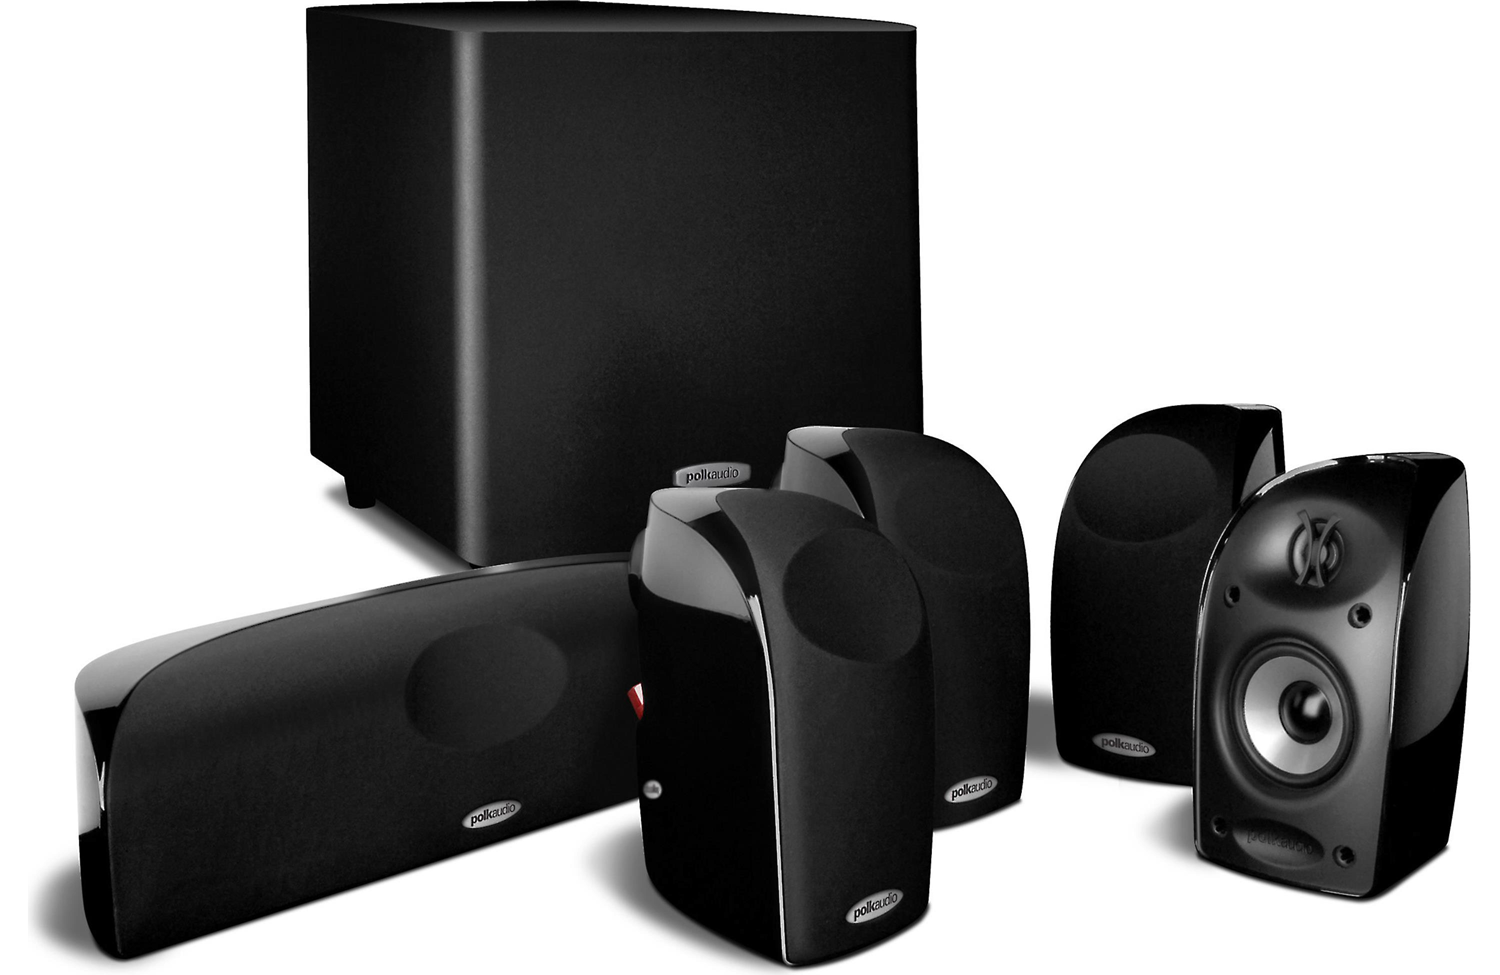 POLK AUDIO Blackstone TL1600 Home Theater Speaker System Black